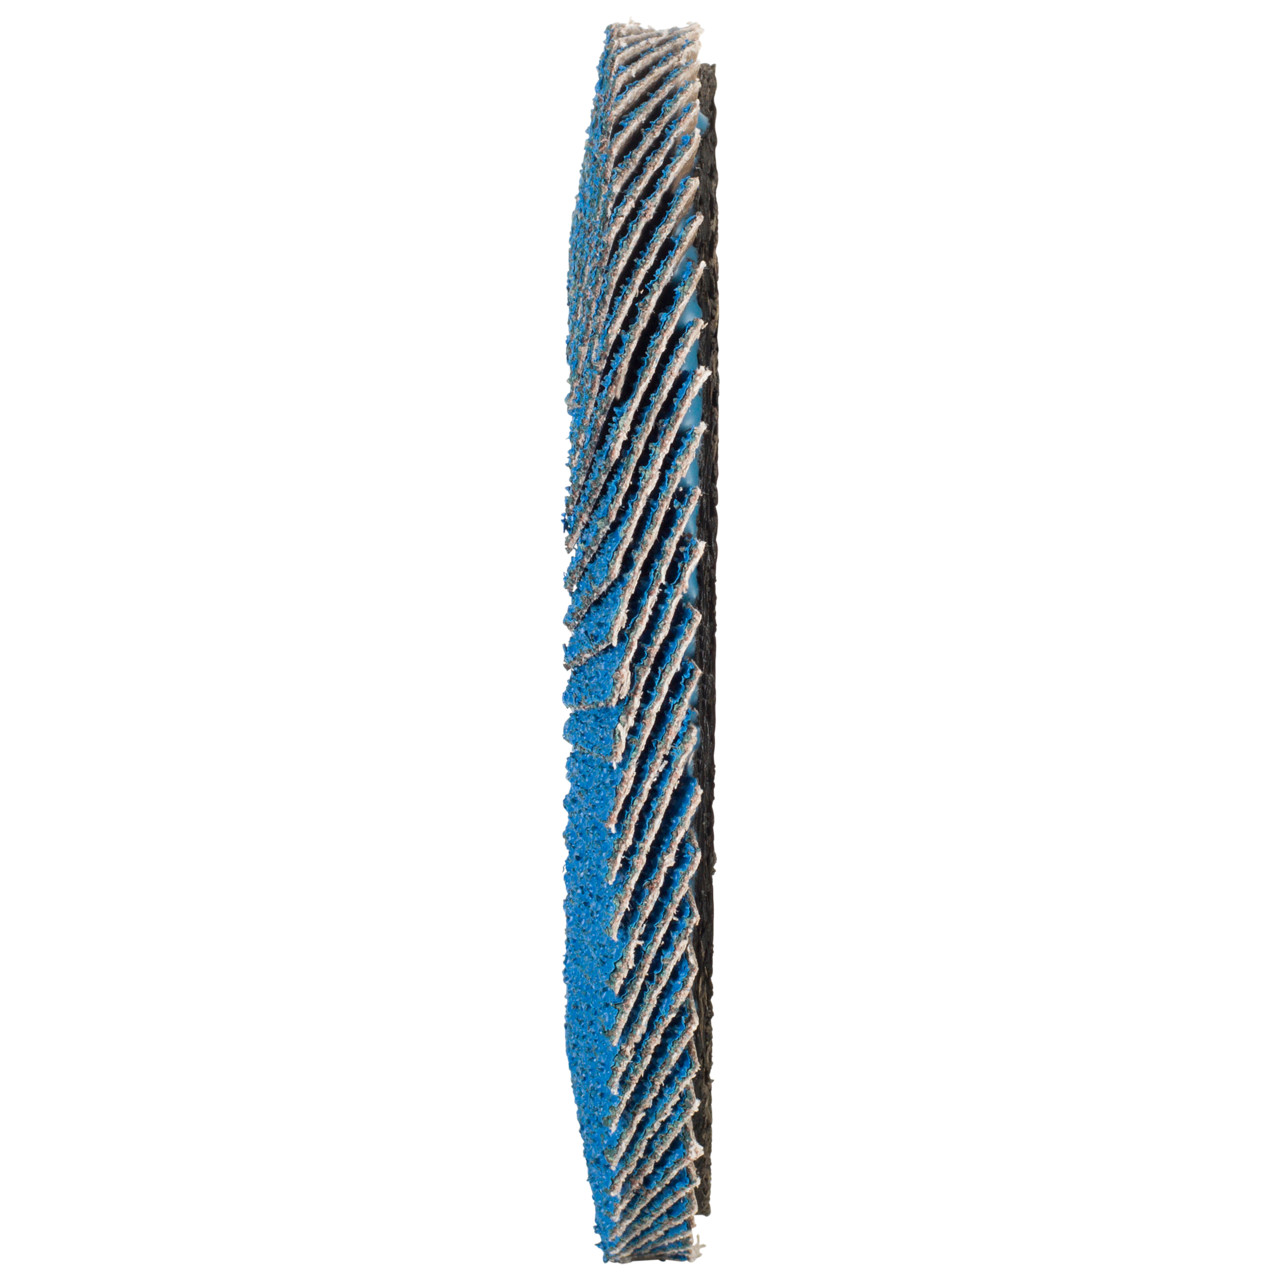 Tyrolit Gekartelde borgring DxH 115x22,2 FASTCUT voor staal &amp; roestvrij staal, P80, vorm: 27A - geslingerde versie (glasvezeldragerhuisversie), Art. 160235